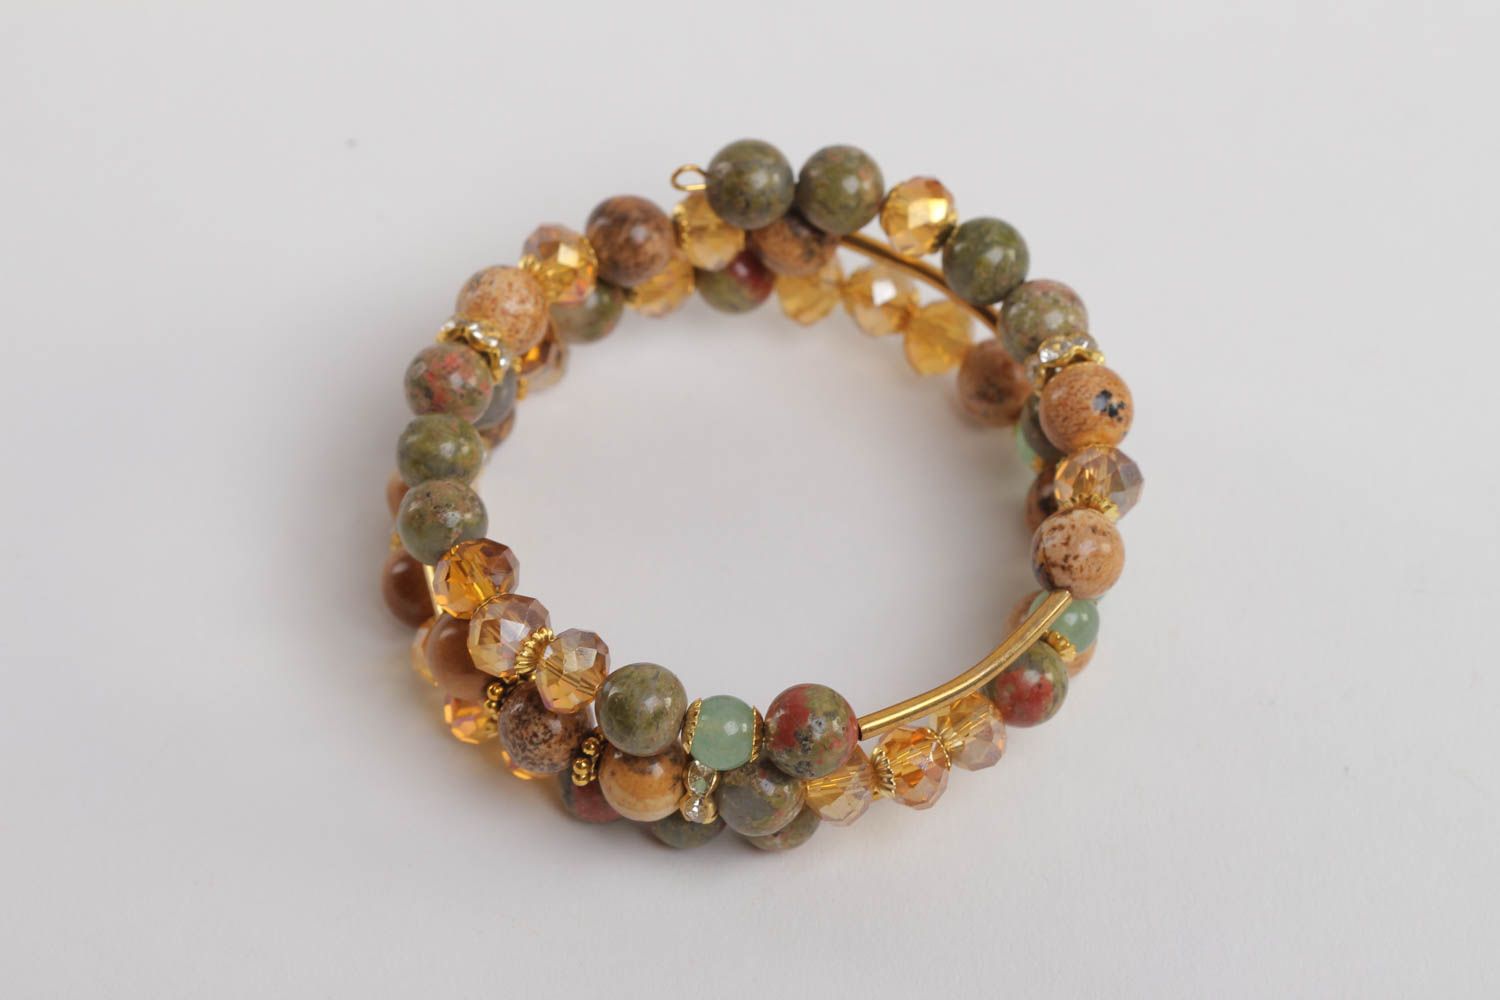 Stylish handmade gemstone bead bracelet artisan jewelry designs gifts for her photo 2